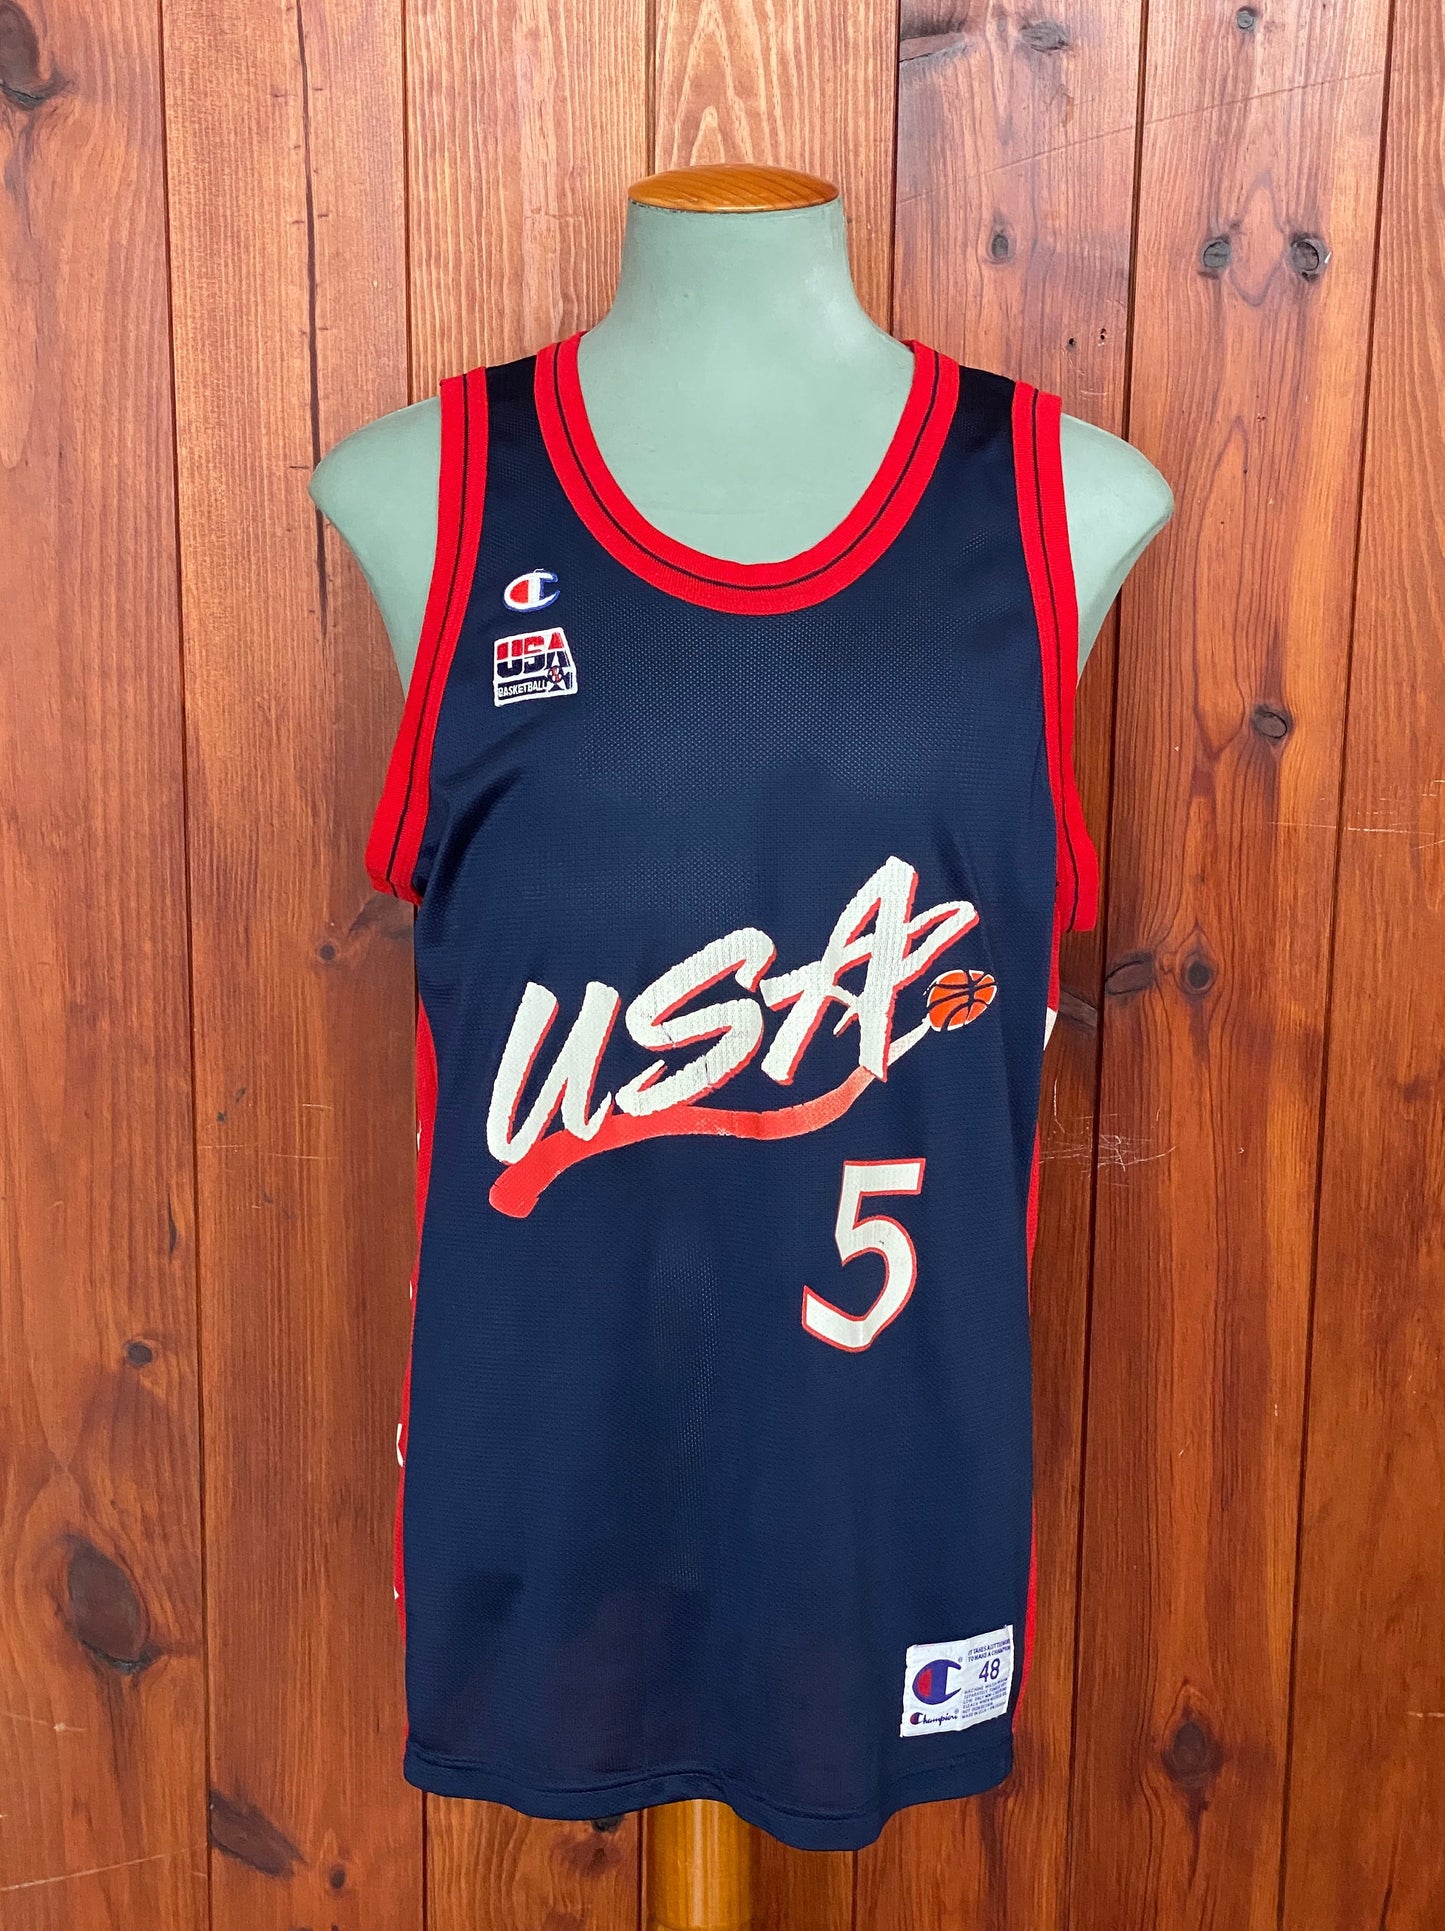 Champion USA Team #5 Hill Jersey, NBA Basketball Jersey, Size 48, Authentic NBA Jersey, Sports Memorabilia, Basketball Apparel